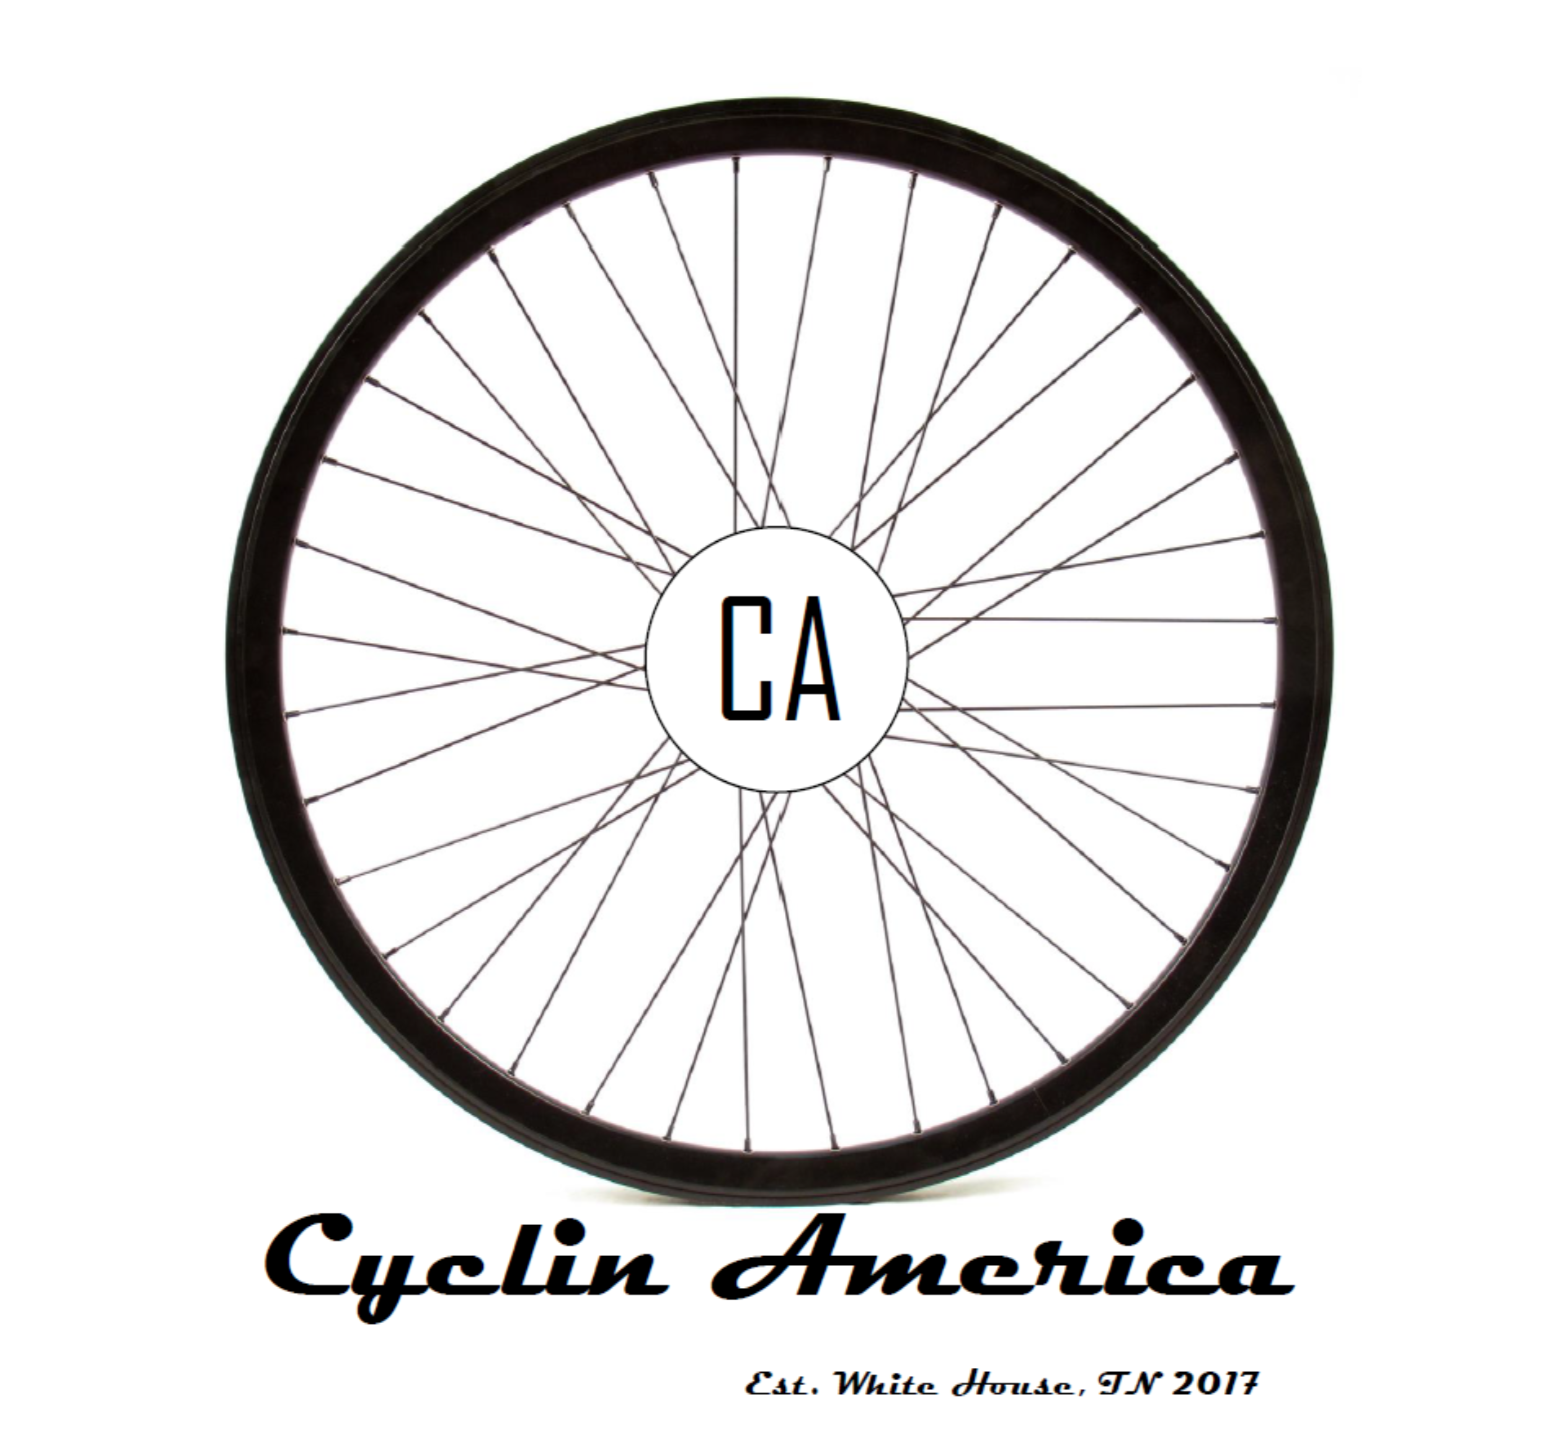 Cyclin' America